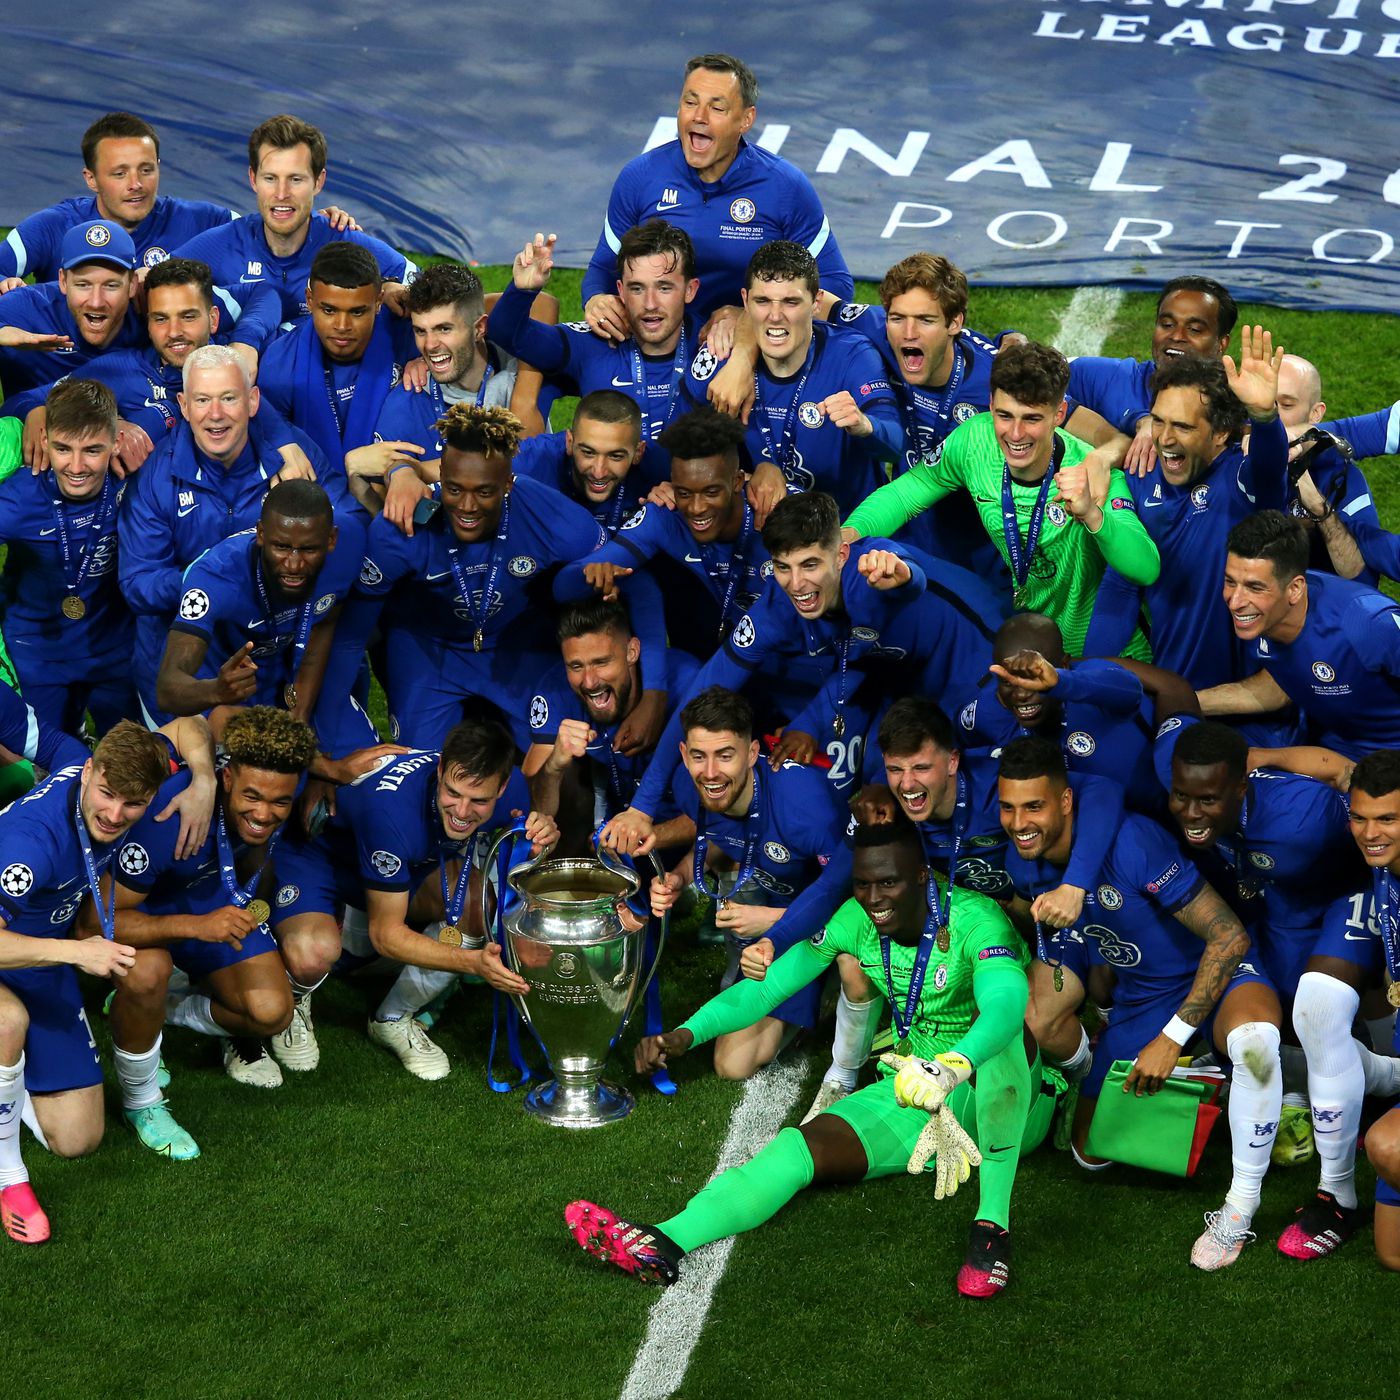 WATCH: Chelsea Champions League trophy lift, celebrations Ain't Got No History